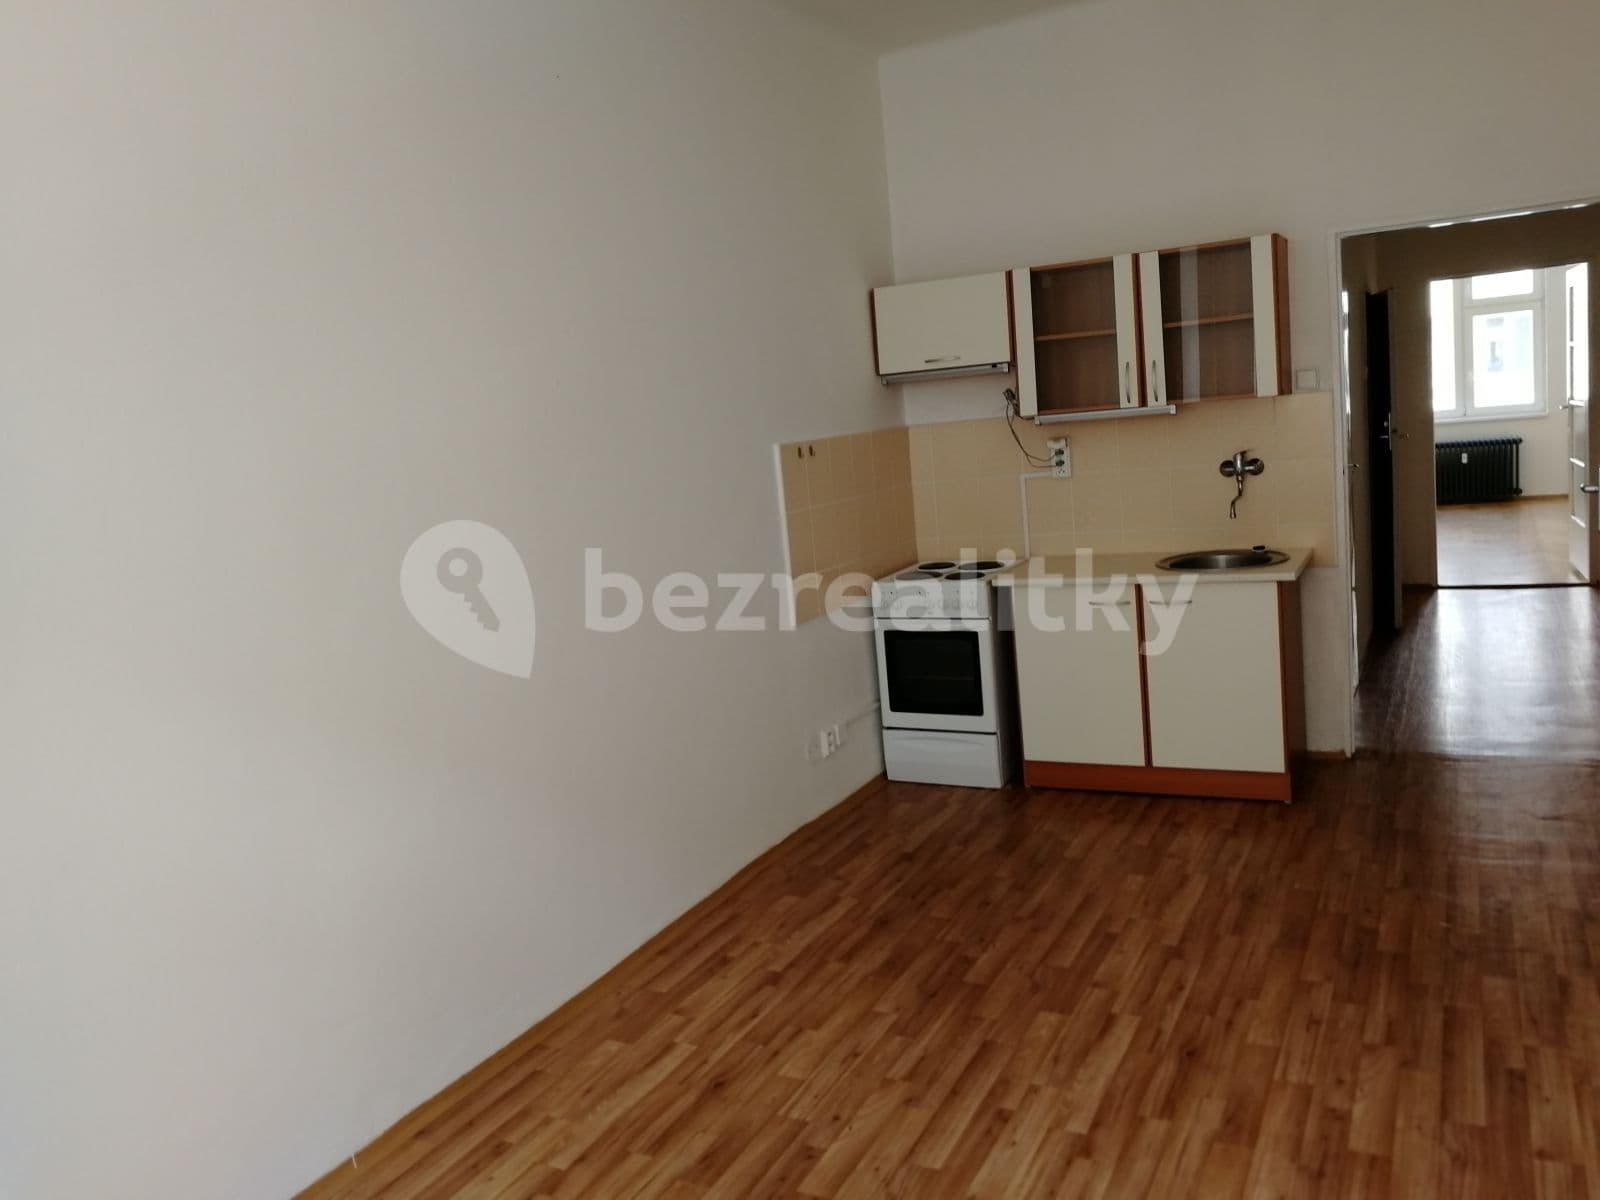 1 bedroom with open-plan kitchen flat to rent, 48 m², Křižíkova, Prague, Prague